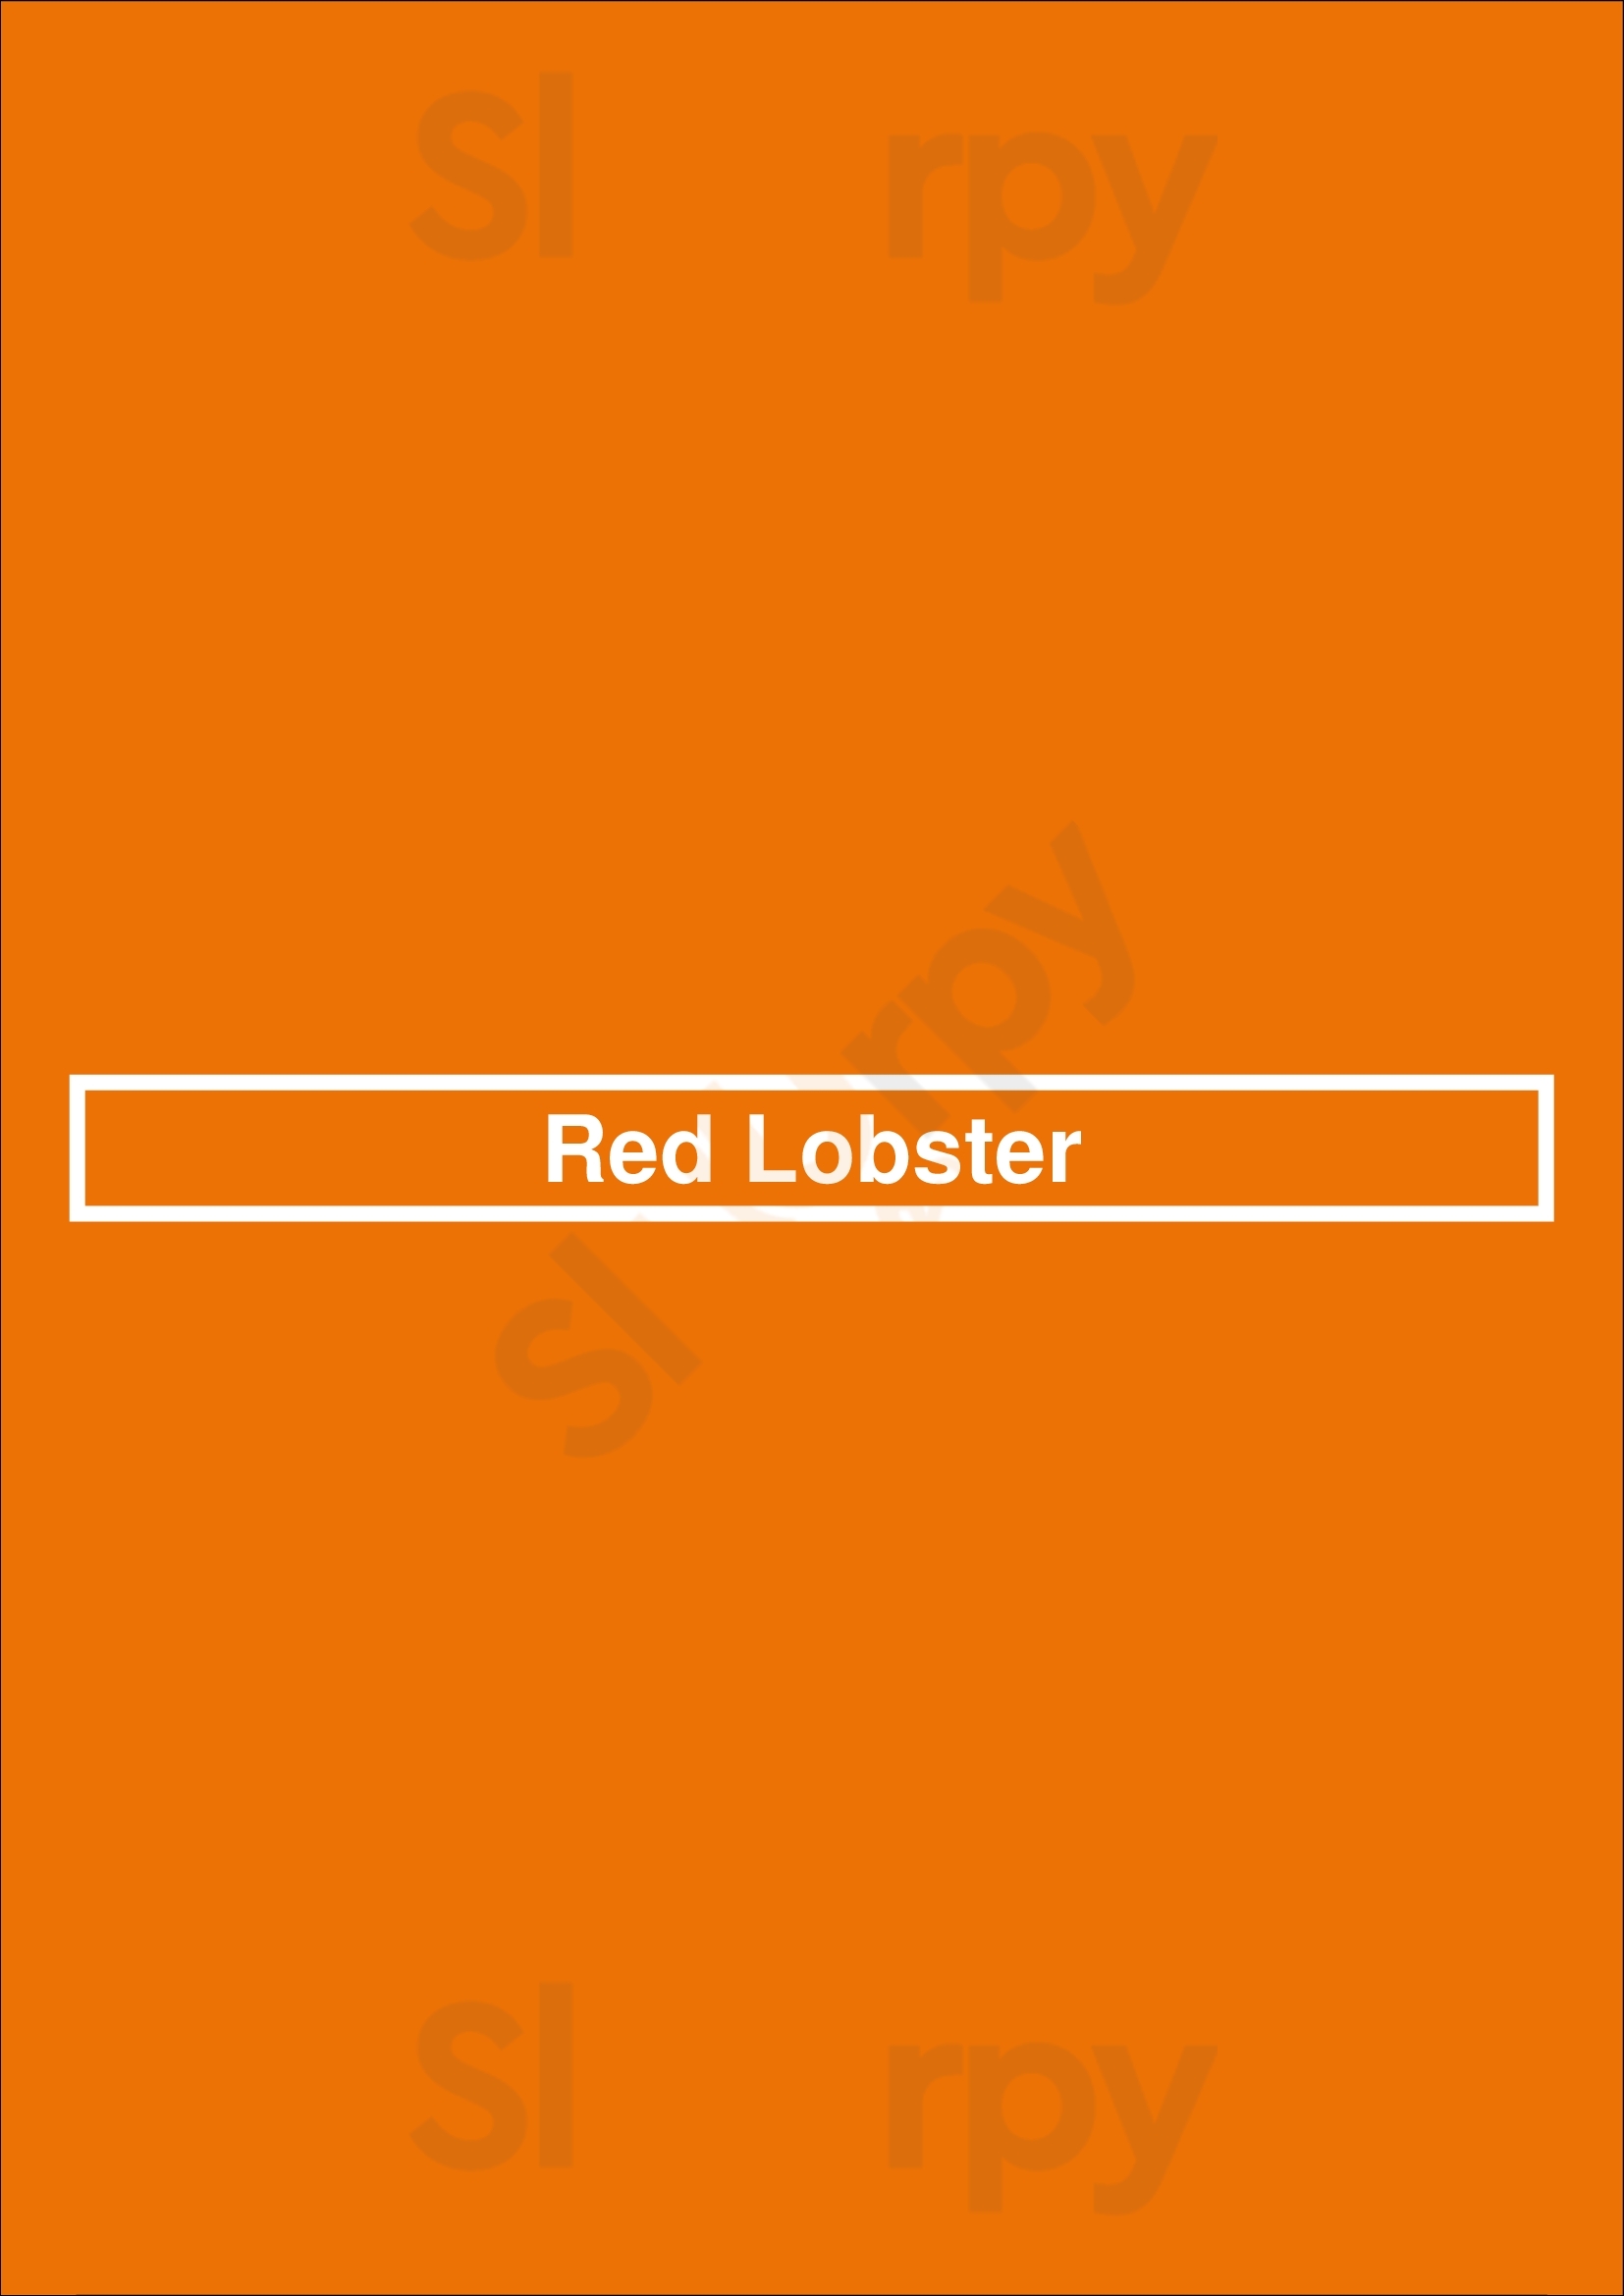 Red Lobster Albuquerque Menu - 1